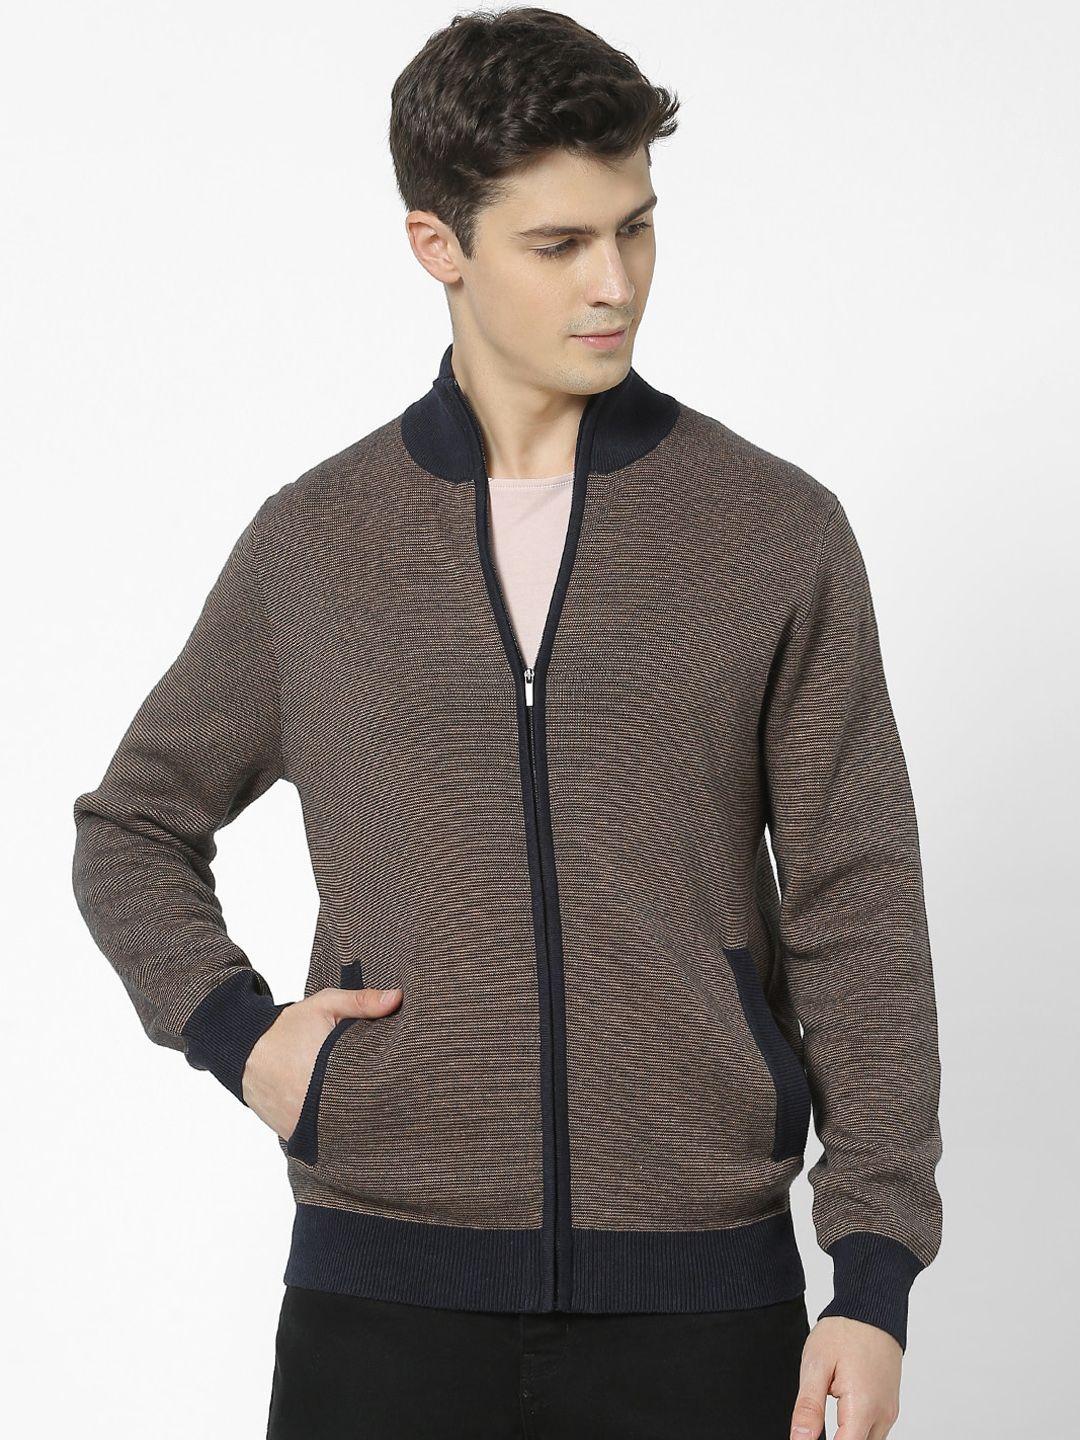 celio men navy blue & brown self design cardigan sweater